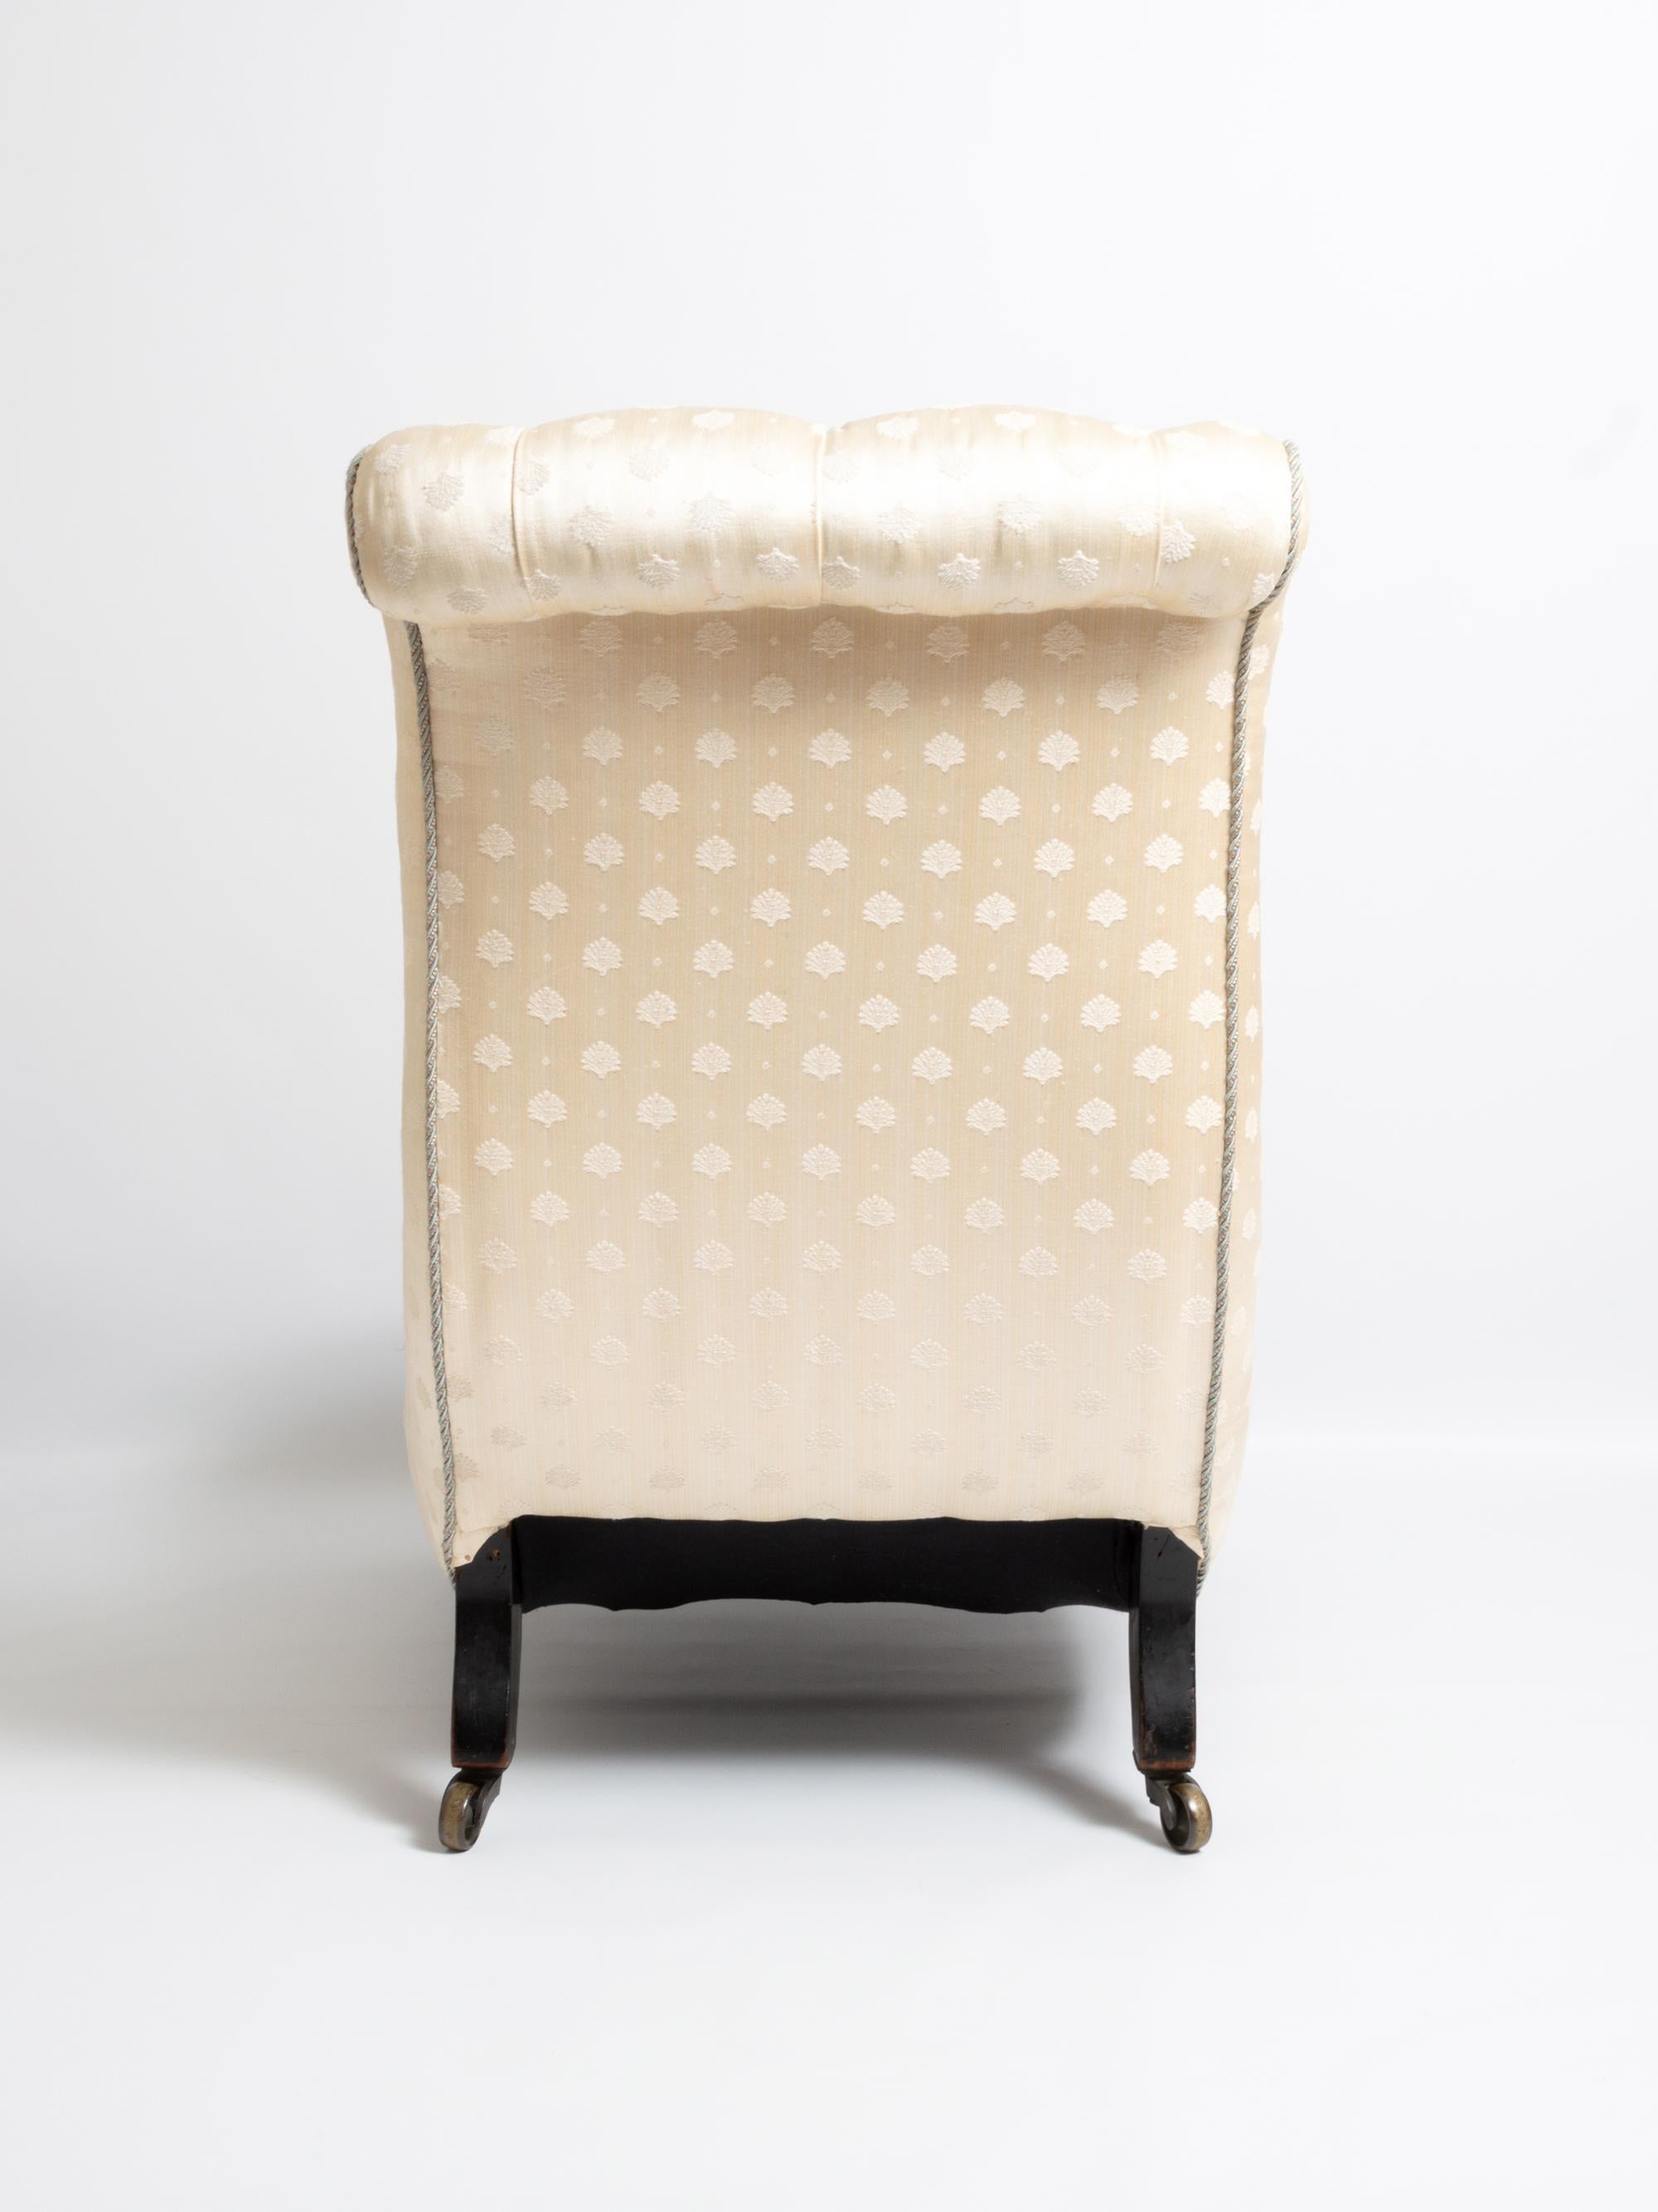 Antique Regency Buttoned Slipper Chair Armchair, England, circa 1820 1